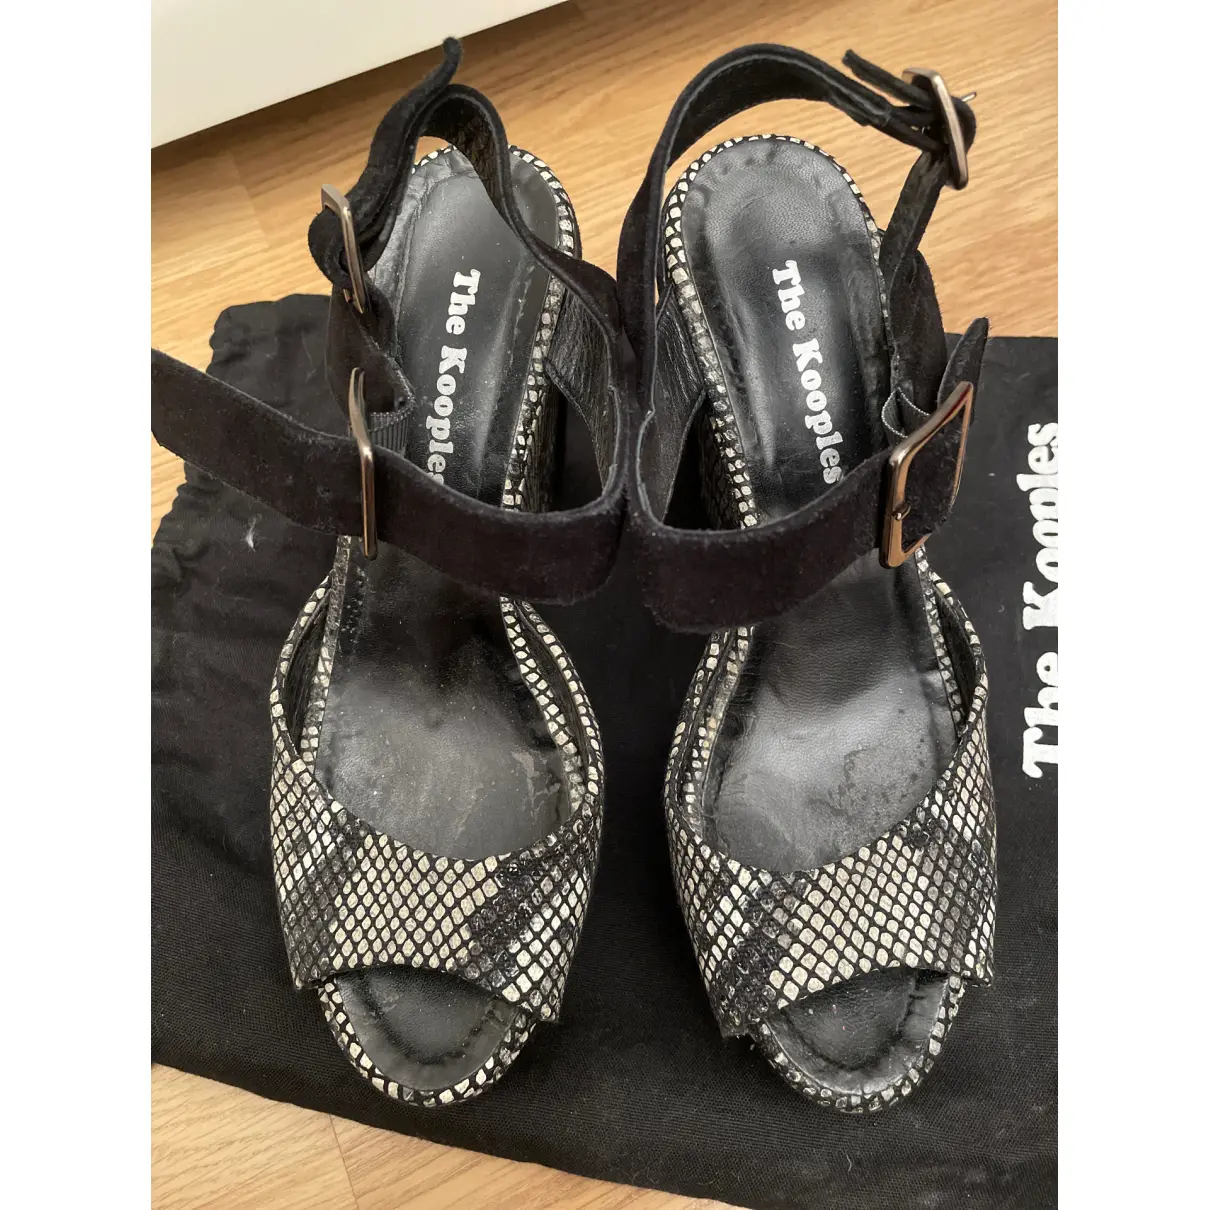 Buy The Kooples Leather sandals online